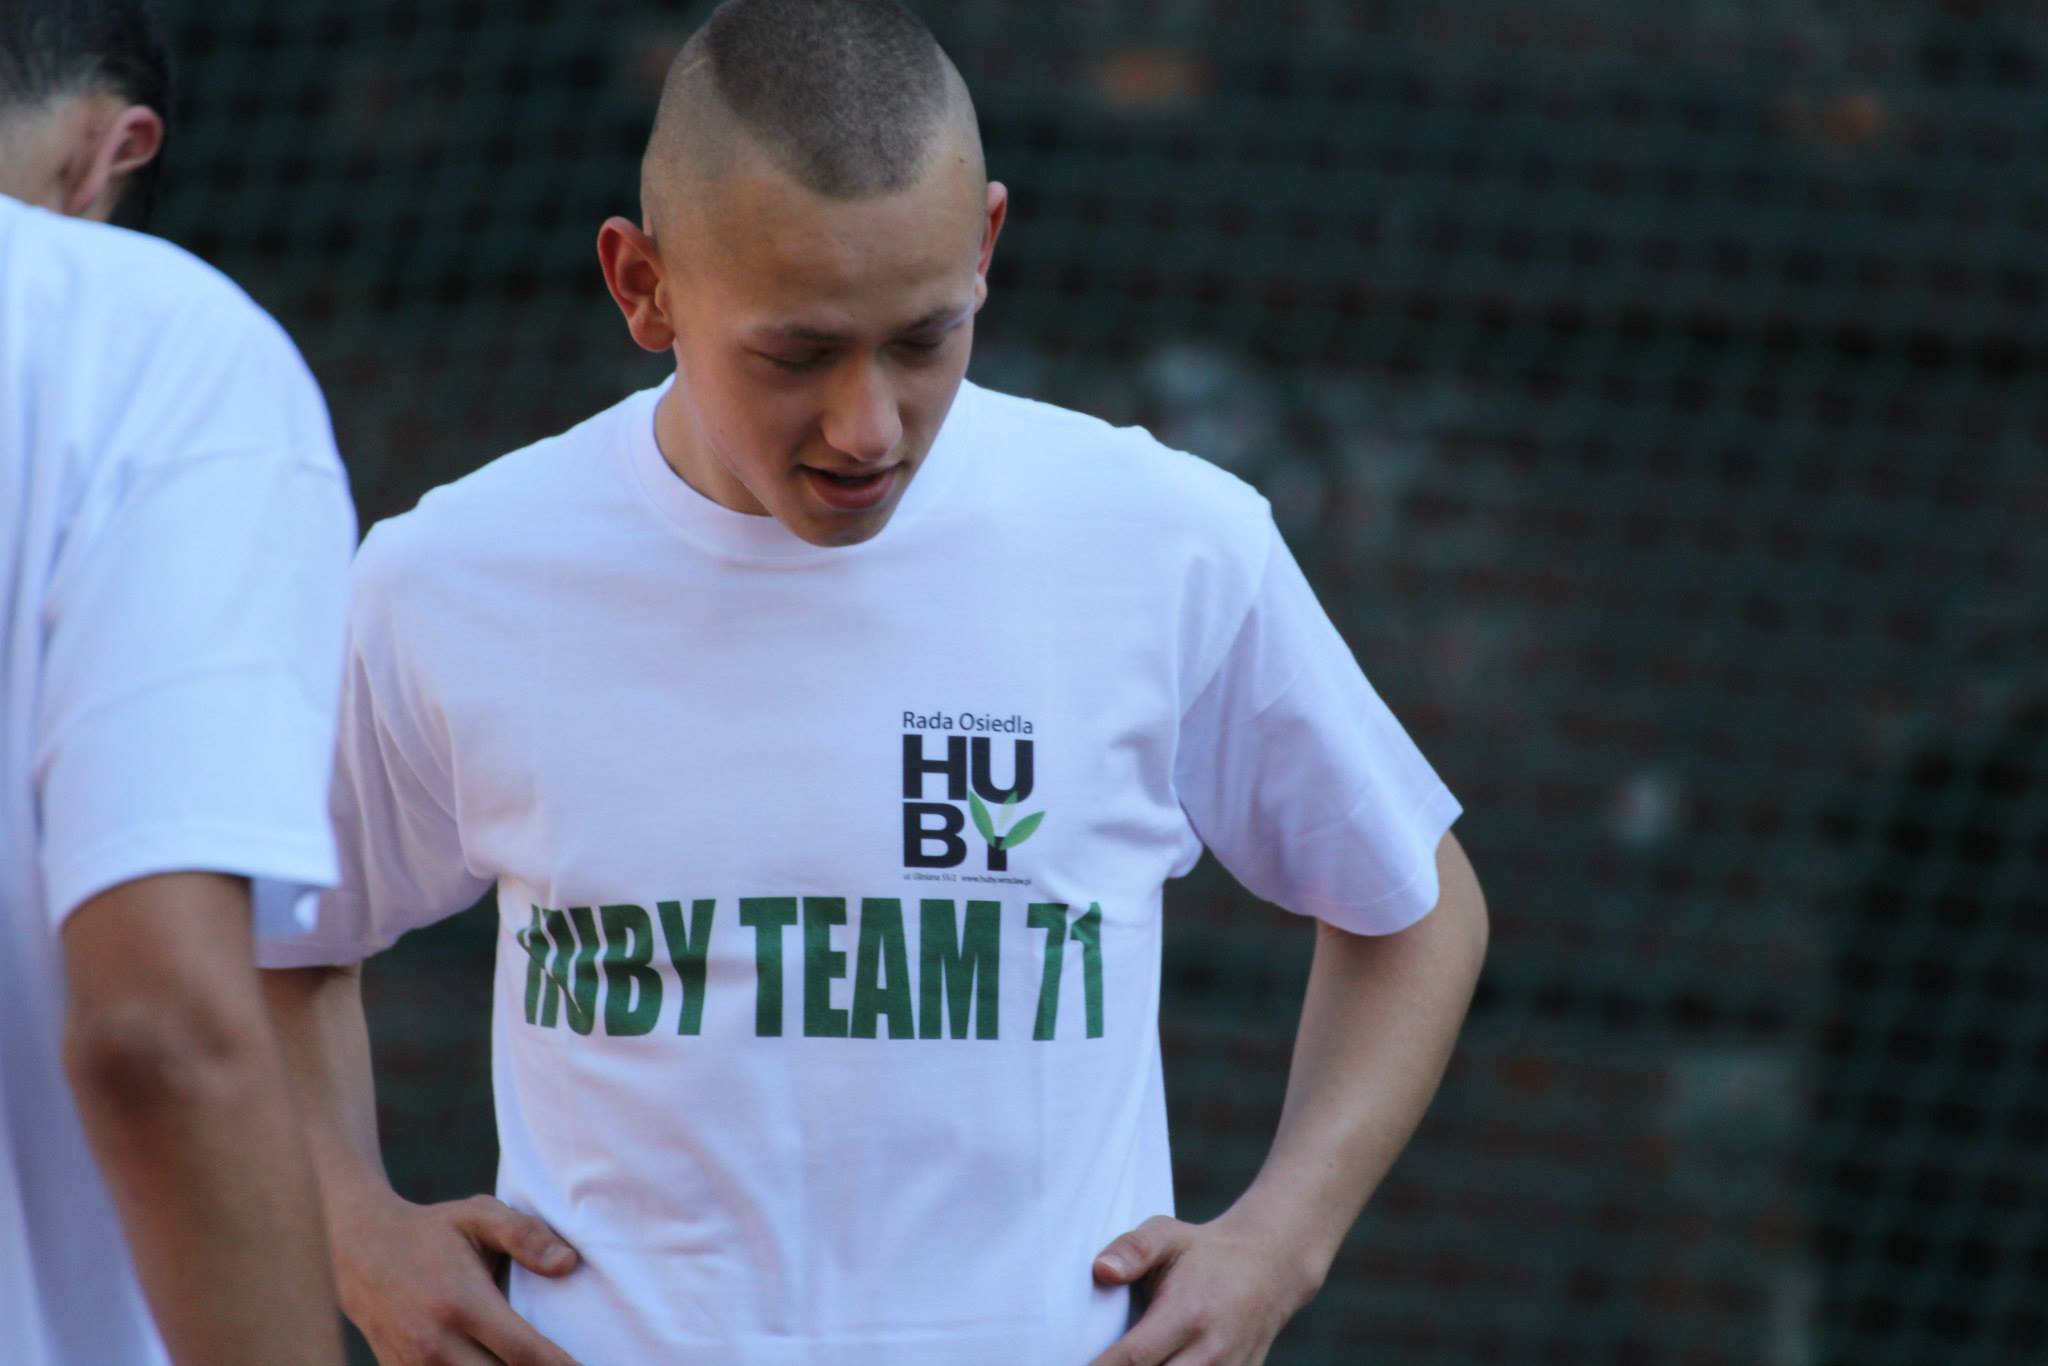 2015 07 Huby team 1